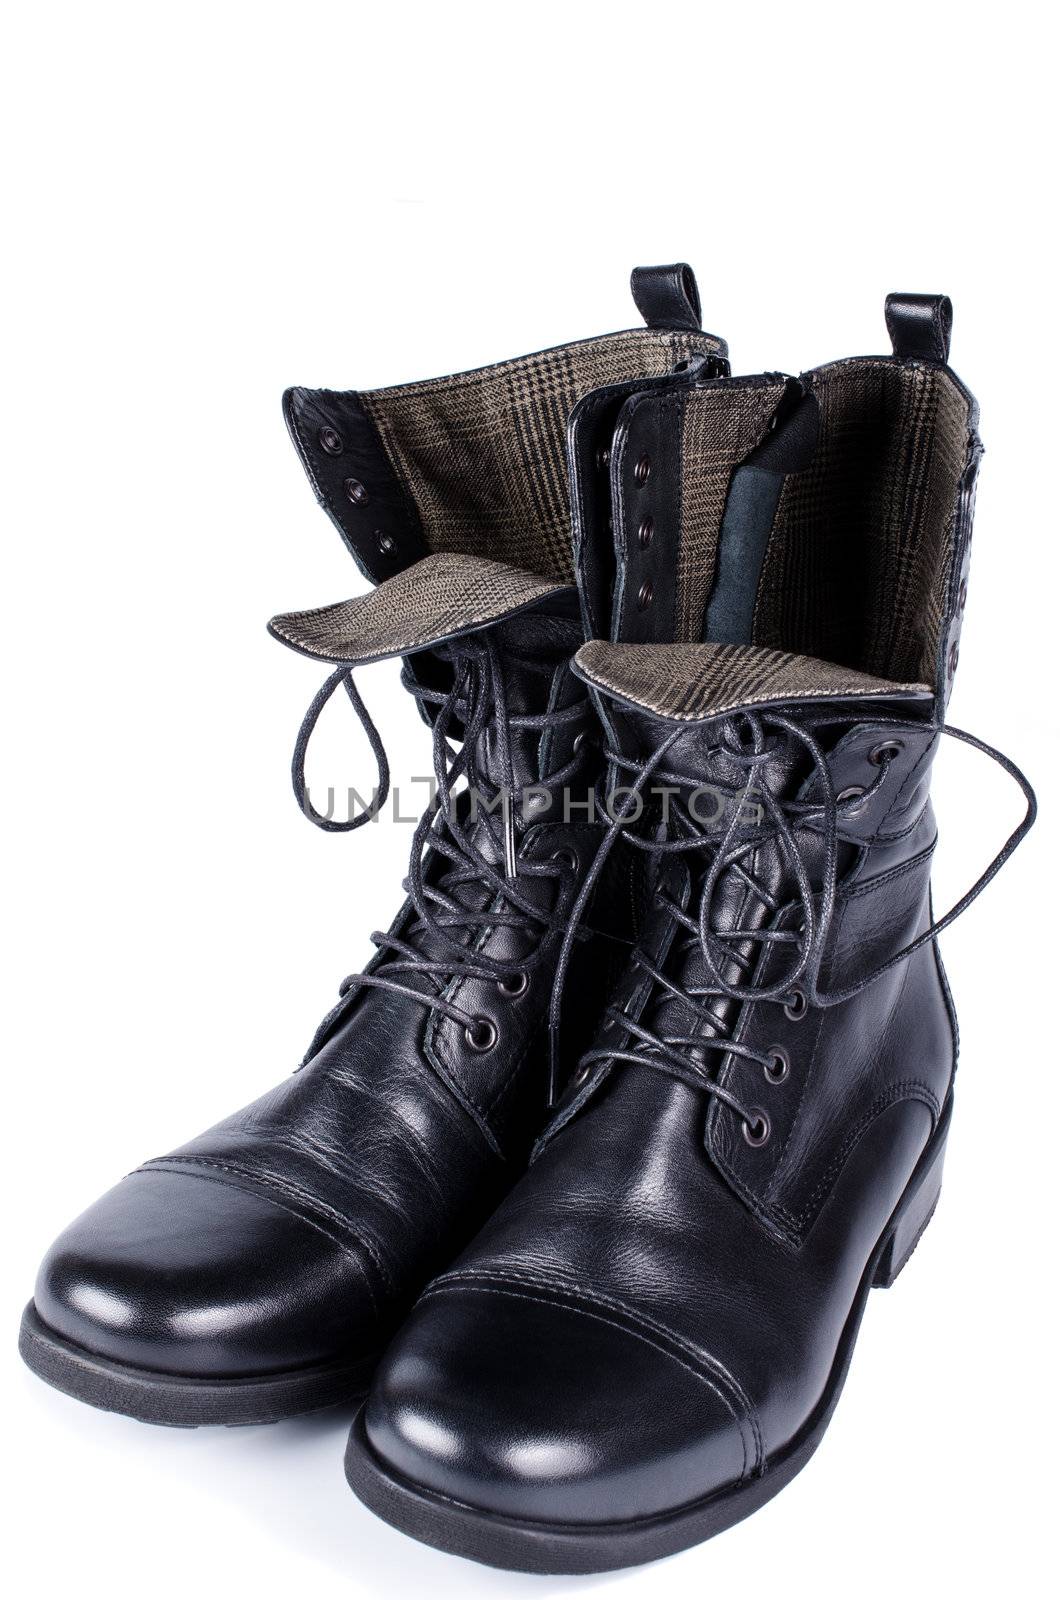 High boots by Nanisimova